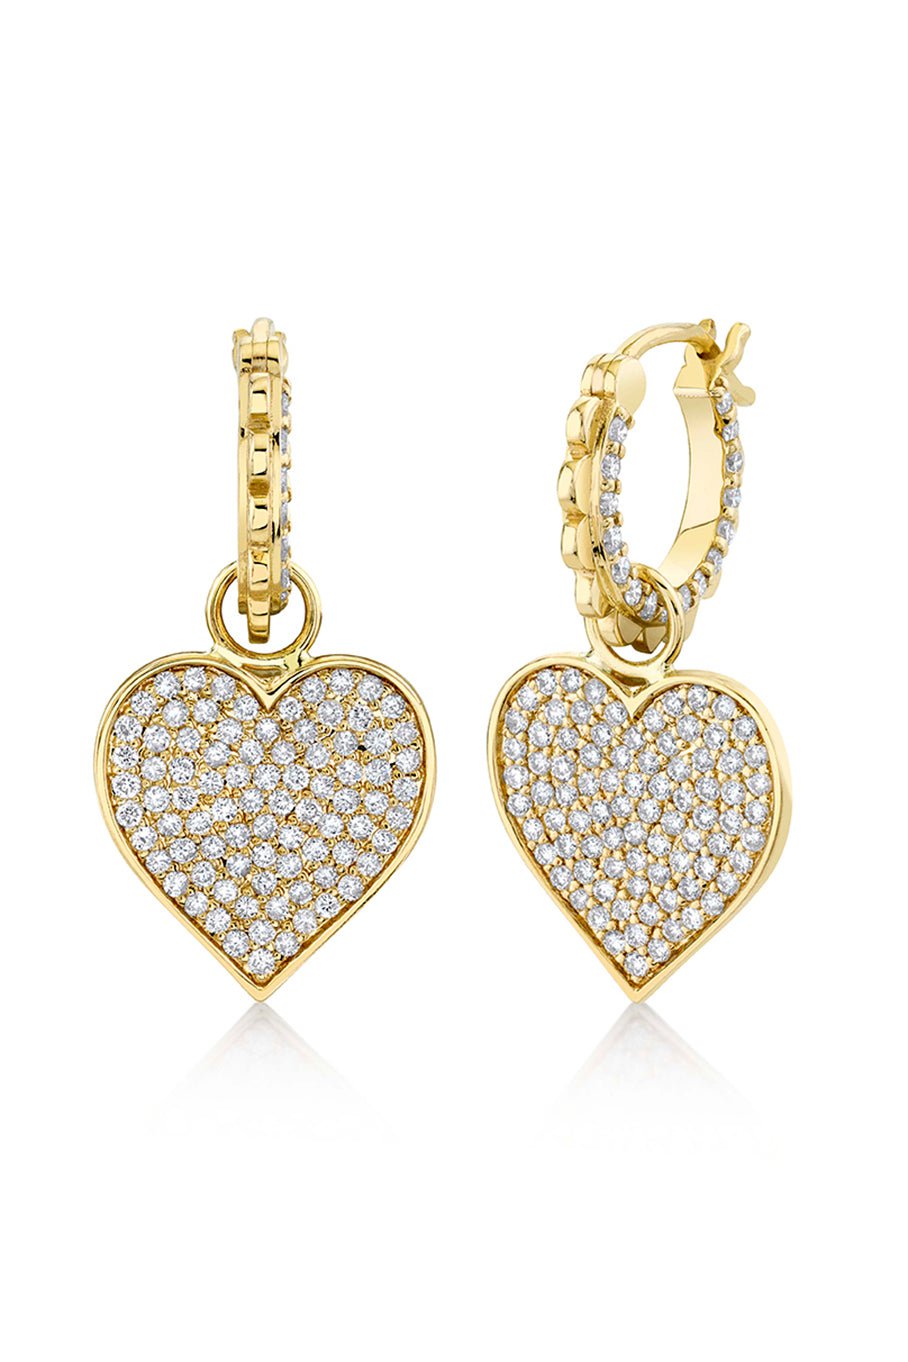 SYDNEY EVAN-Scallop Hoop Diamond Heart Earrings-YELLOW GOLD